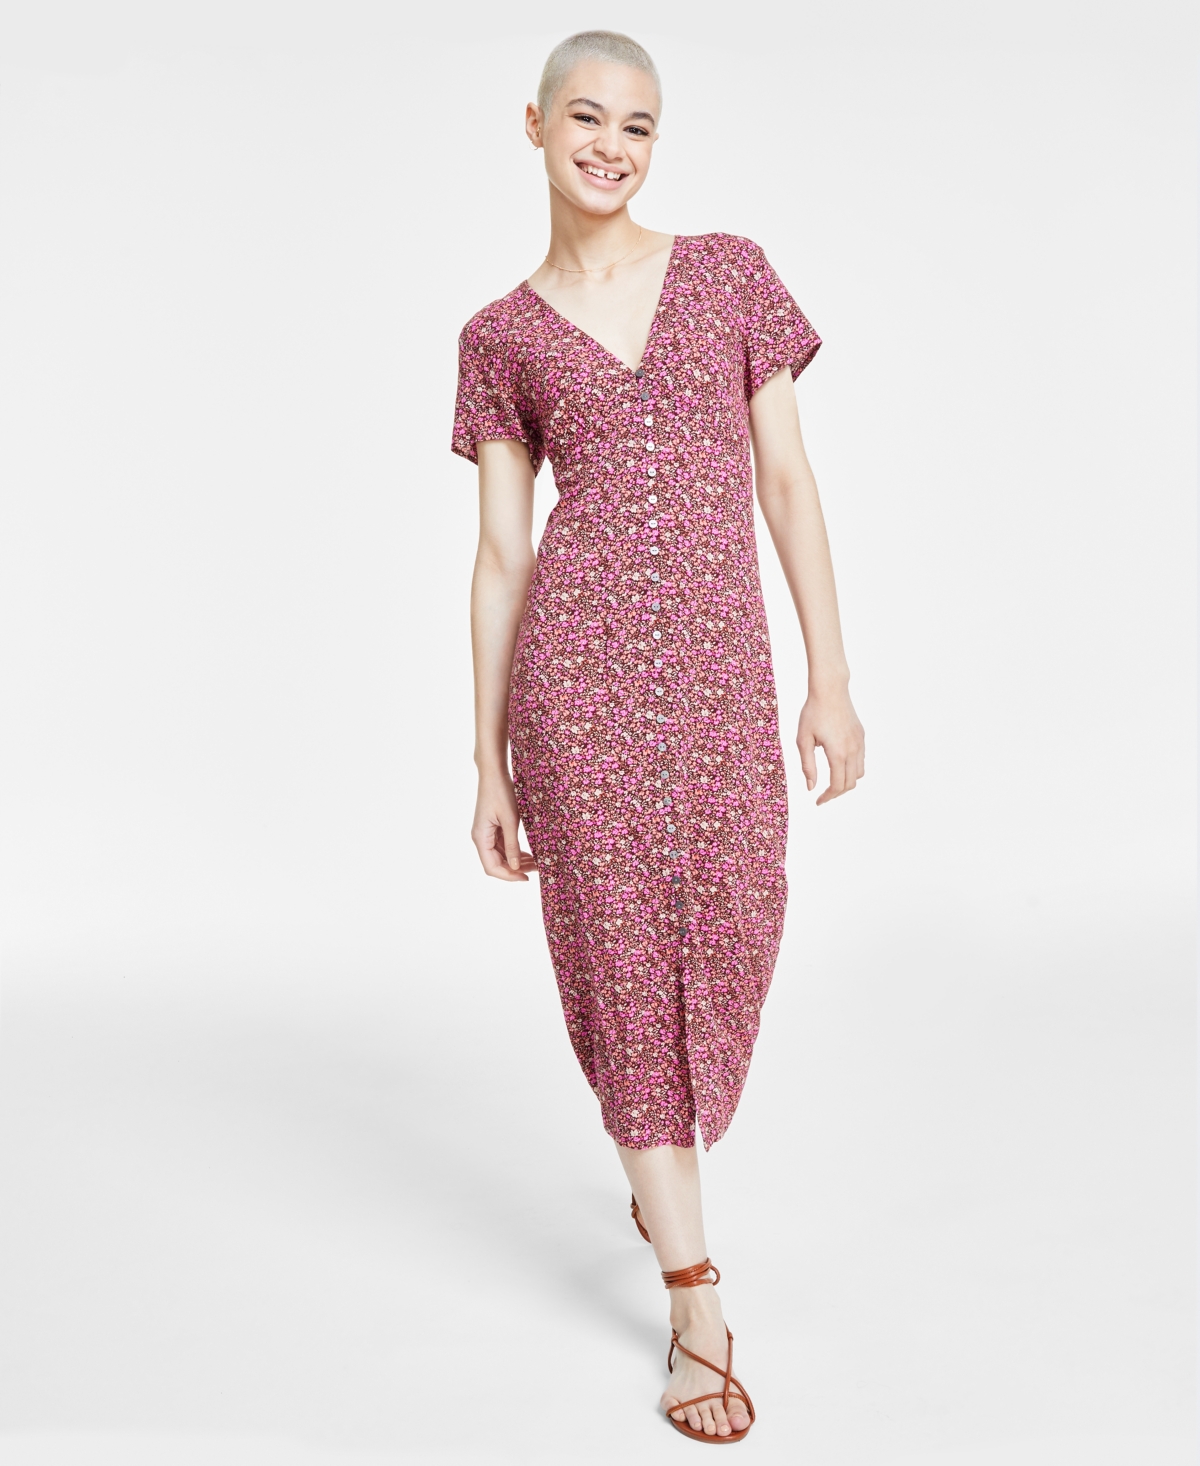 Women's Floral Print Button Front Midi Dress - Rum Raisin Multi